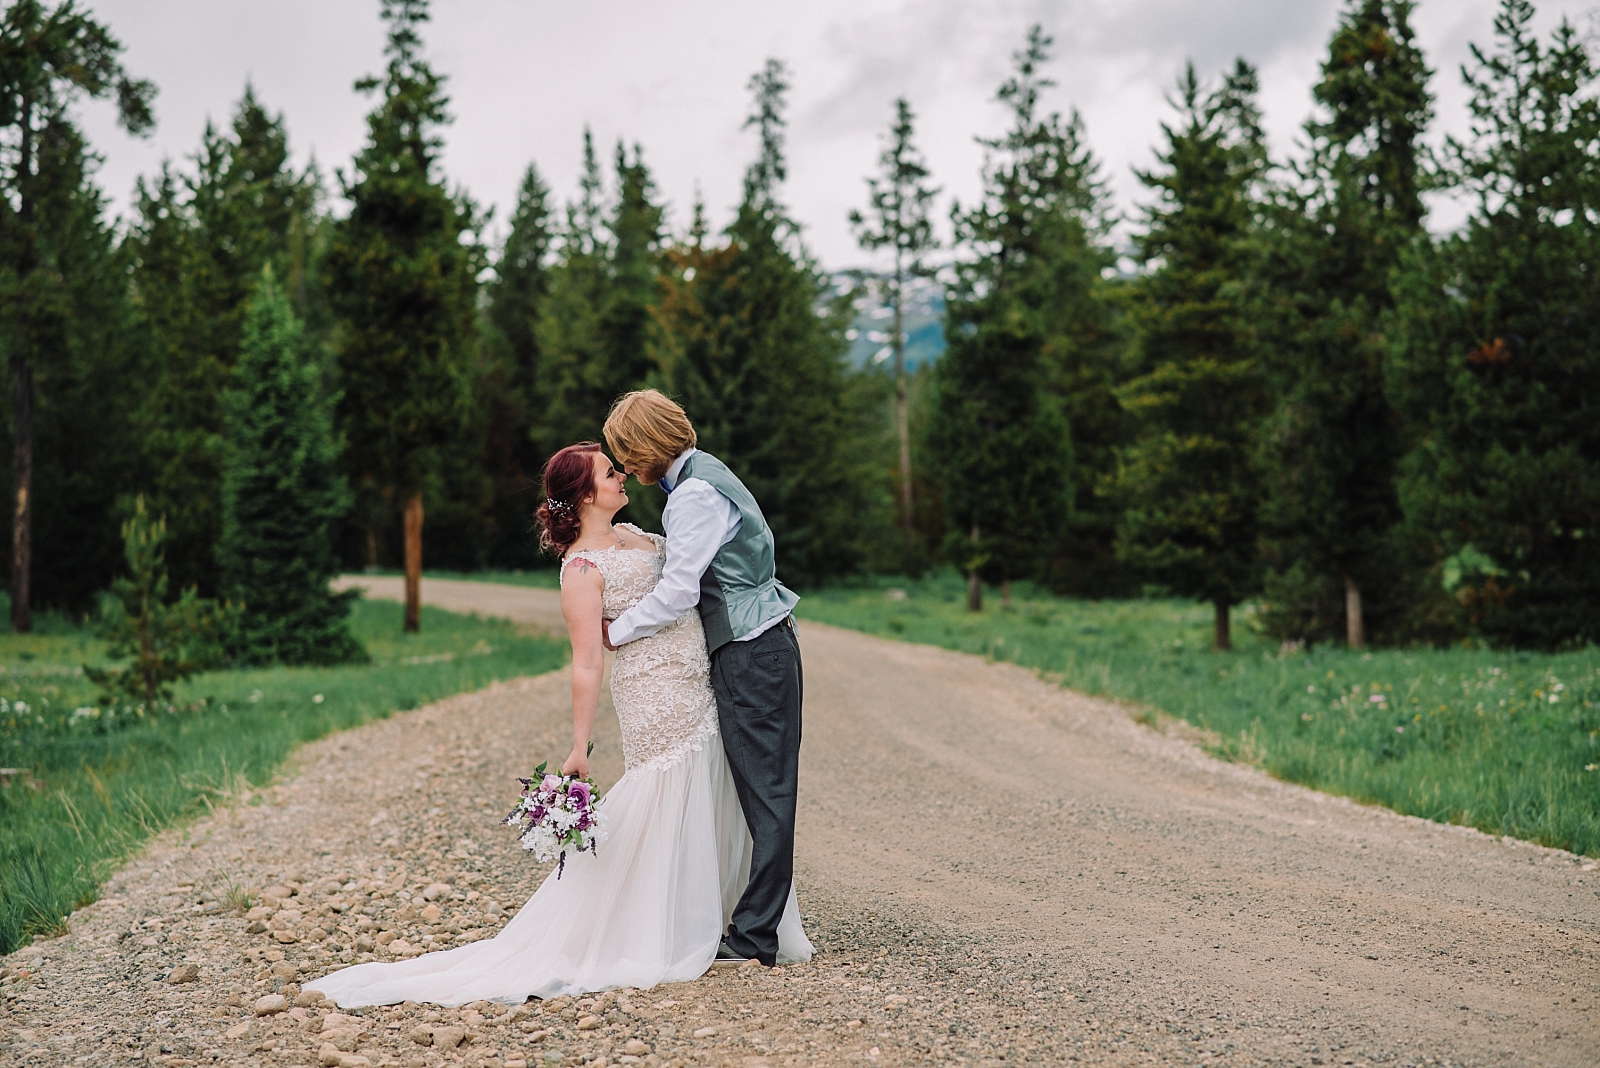 bride and groom in dirt road